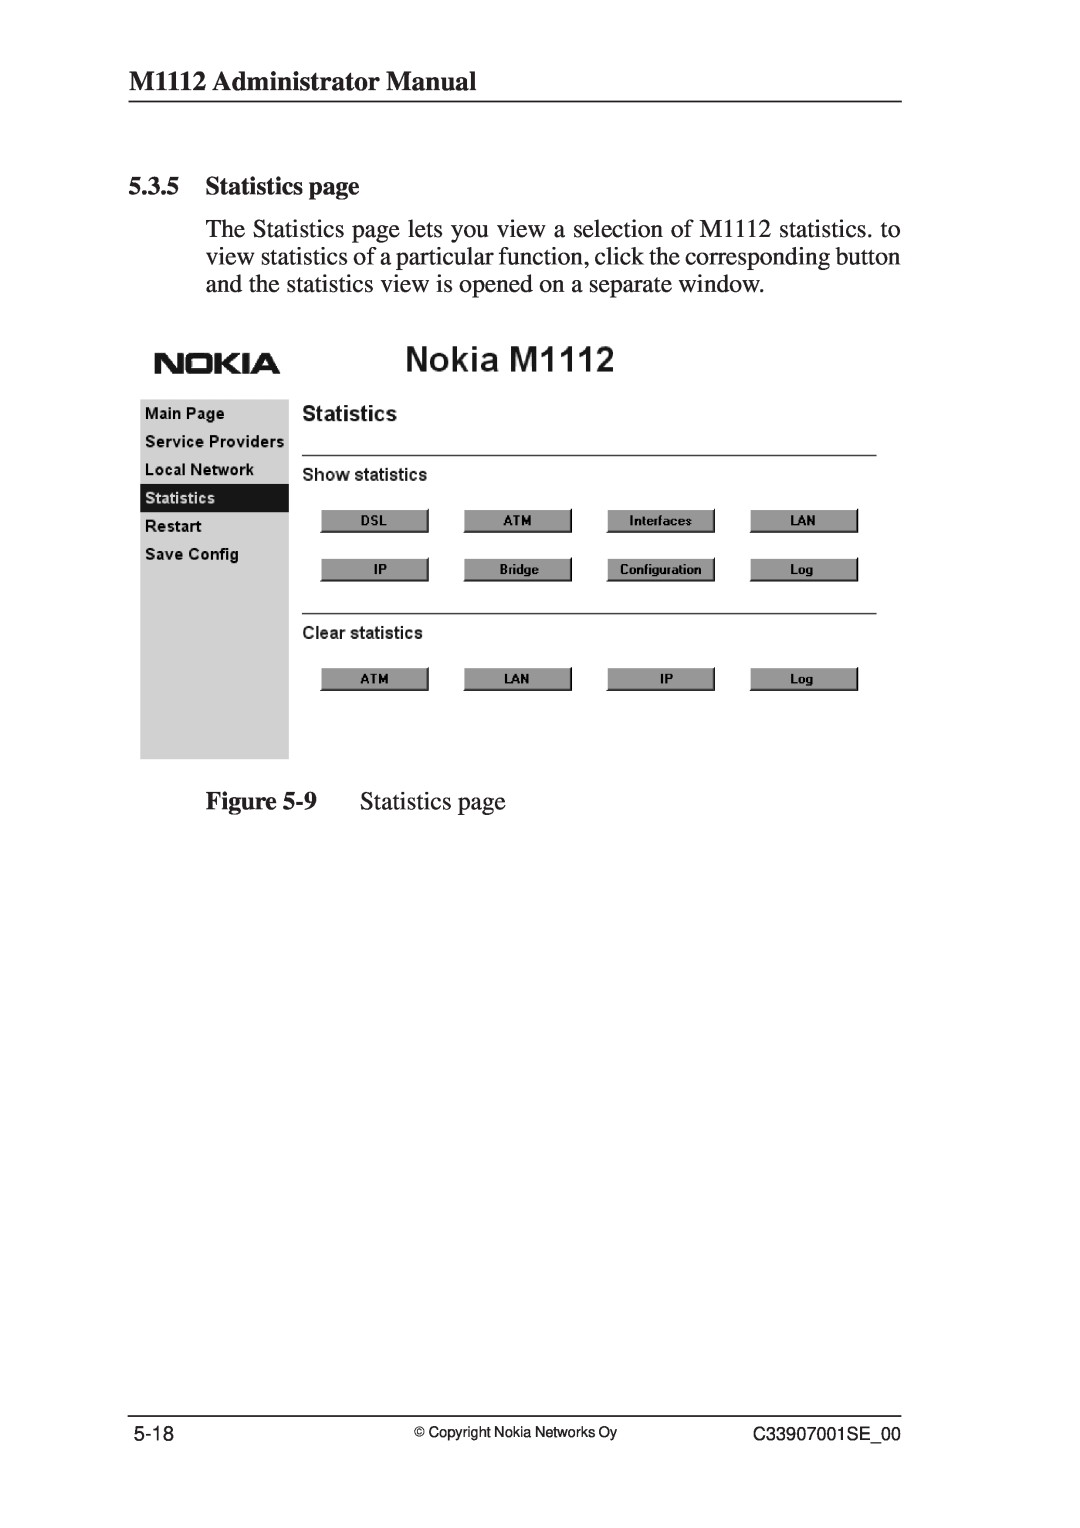 Nokia manual M1112 Administrator Manual, Statistics page, 5-18, E Copyright Nokia Networks Oy 